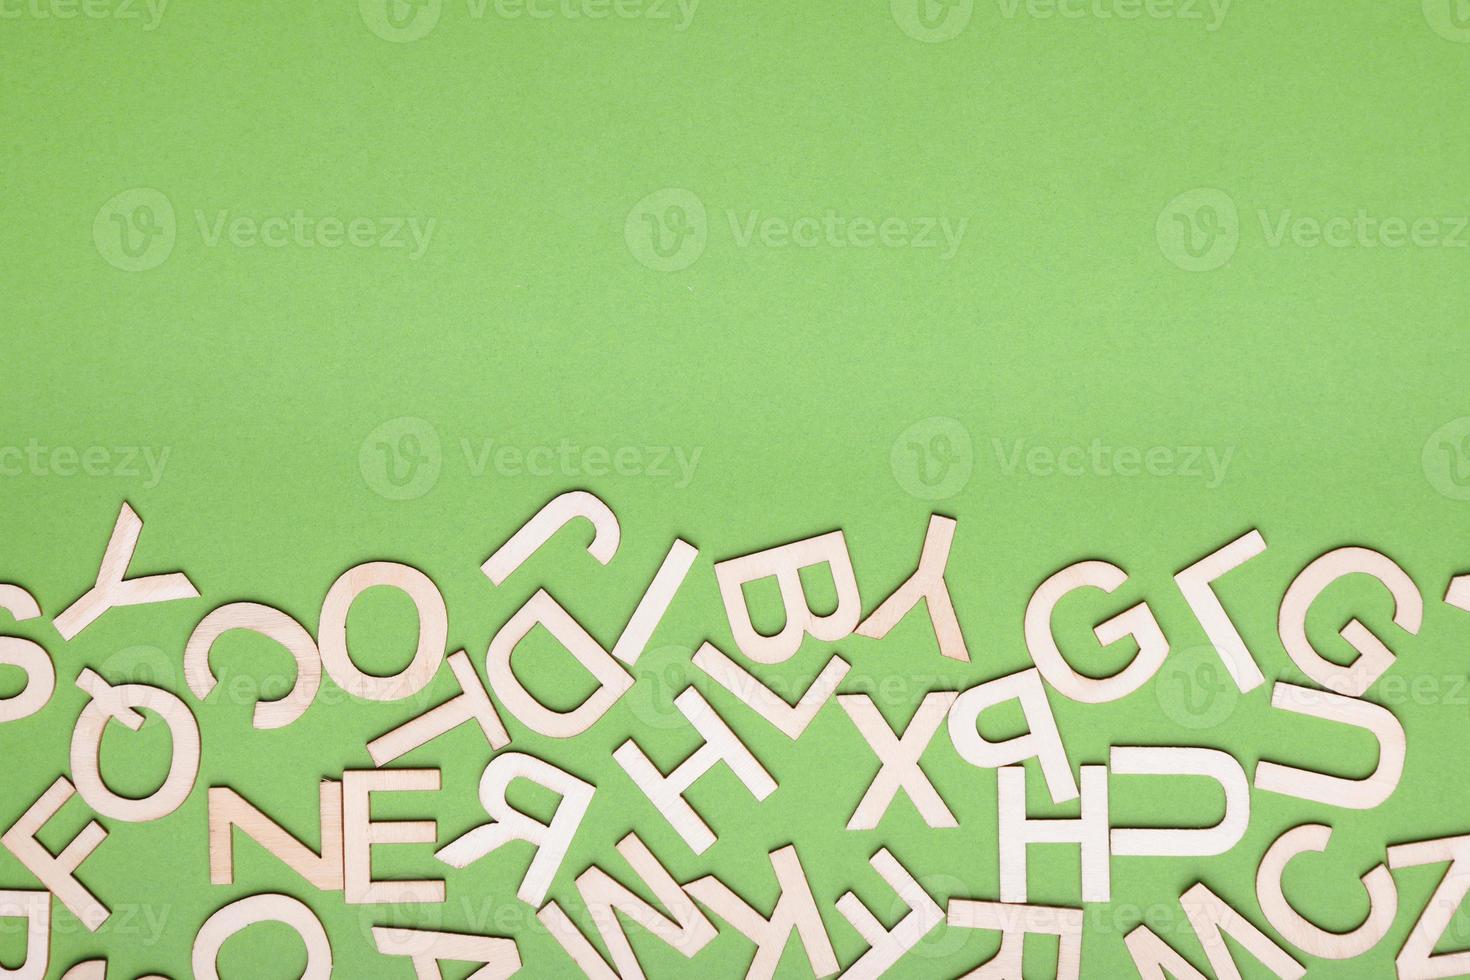 mengelmoes van houten letters op groenboekachtergrond foto